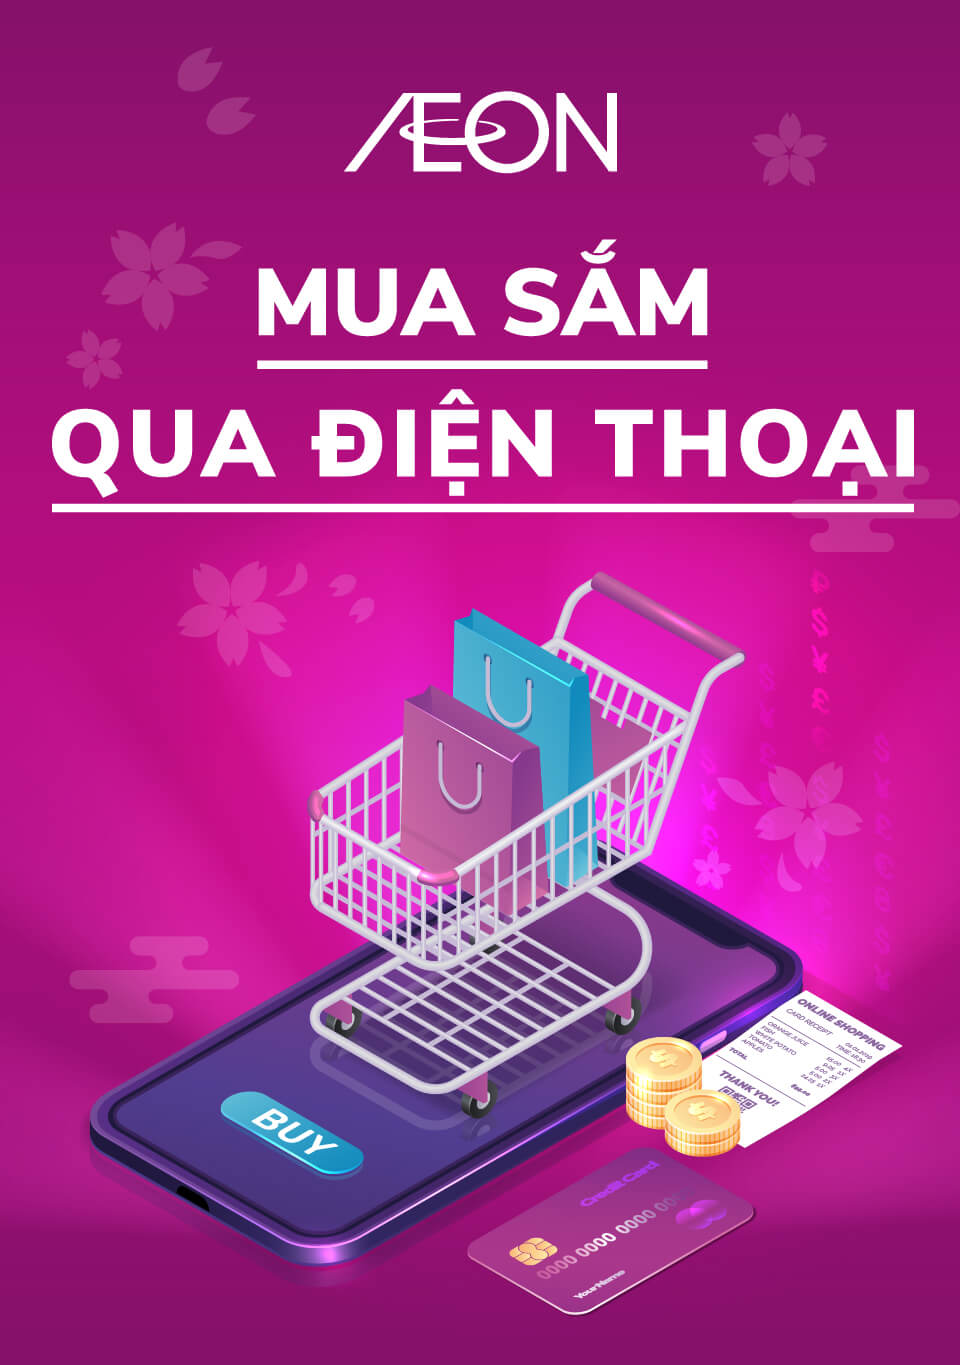 Aeon online shopping app